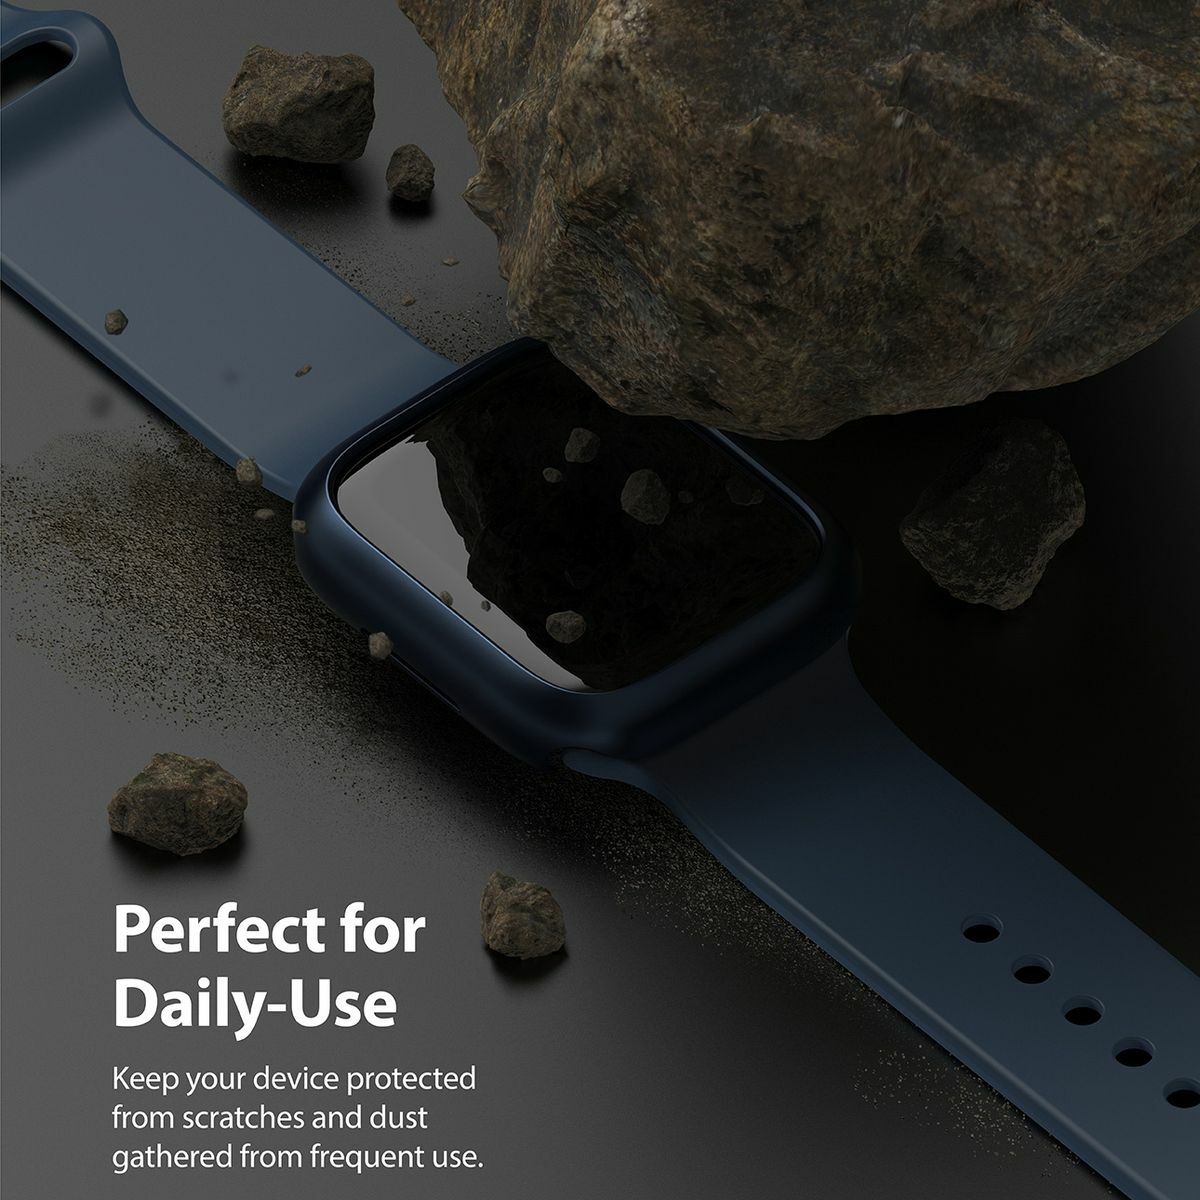 Ringke Watch 7 Series, tok, 41 mm, Slim (2db/csomag), Átlátszó/Kék